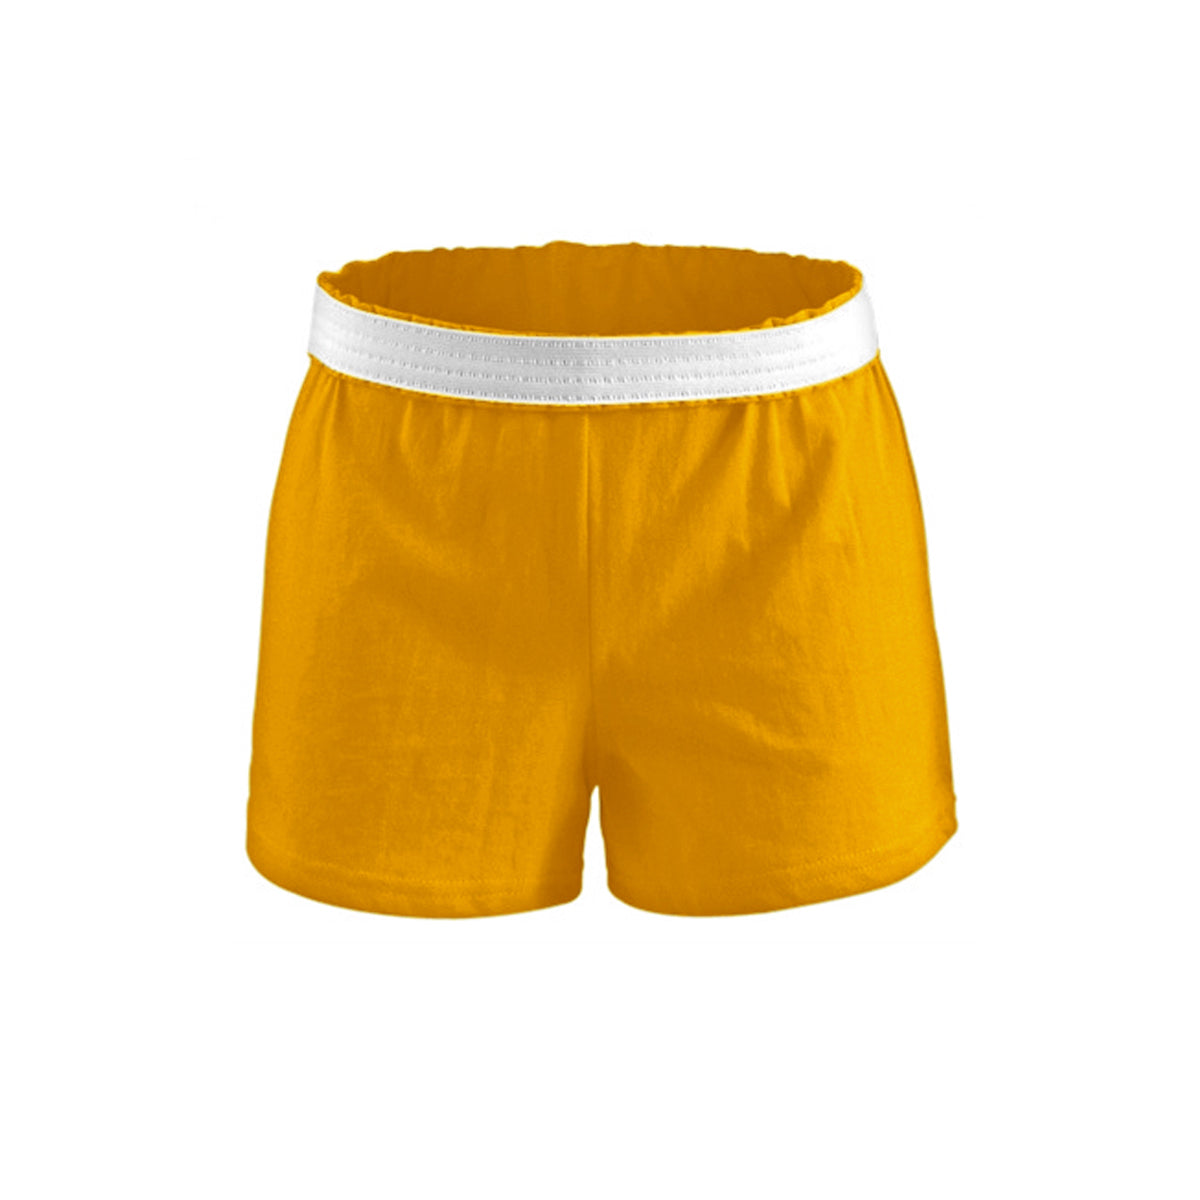 Sussex Middle Design 4 Shorts